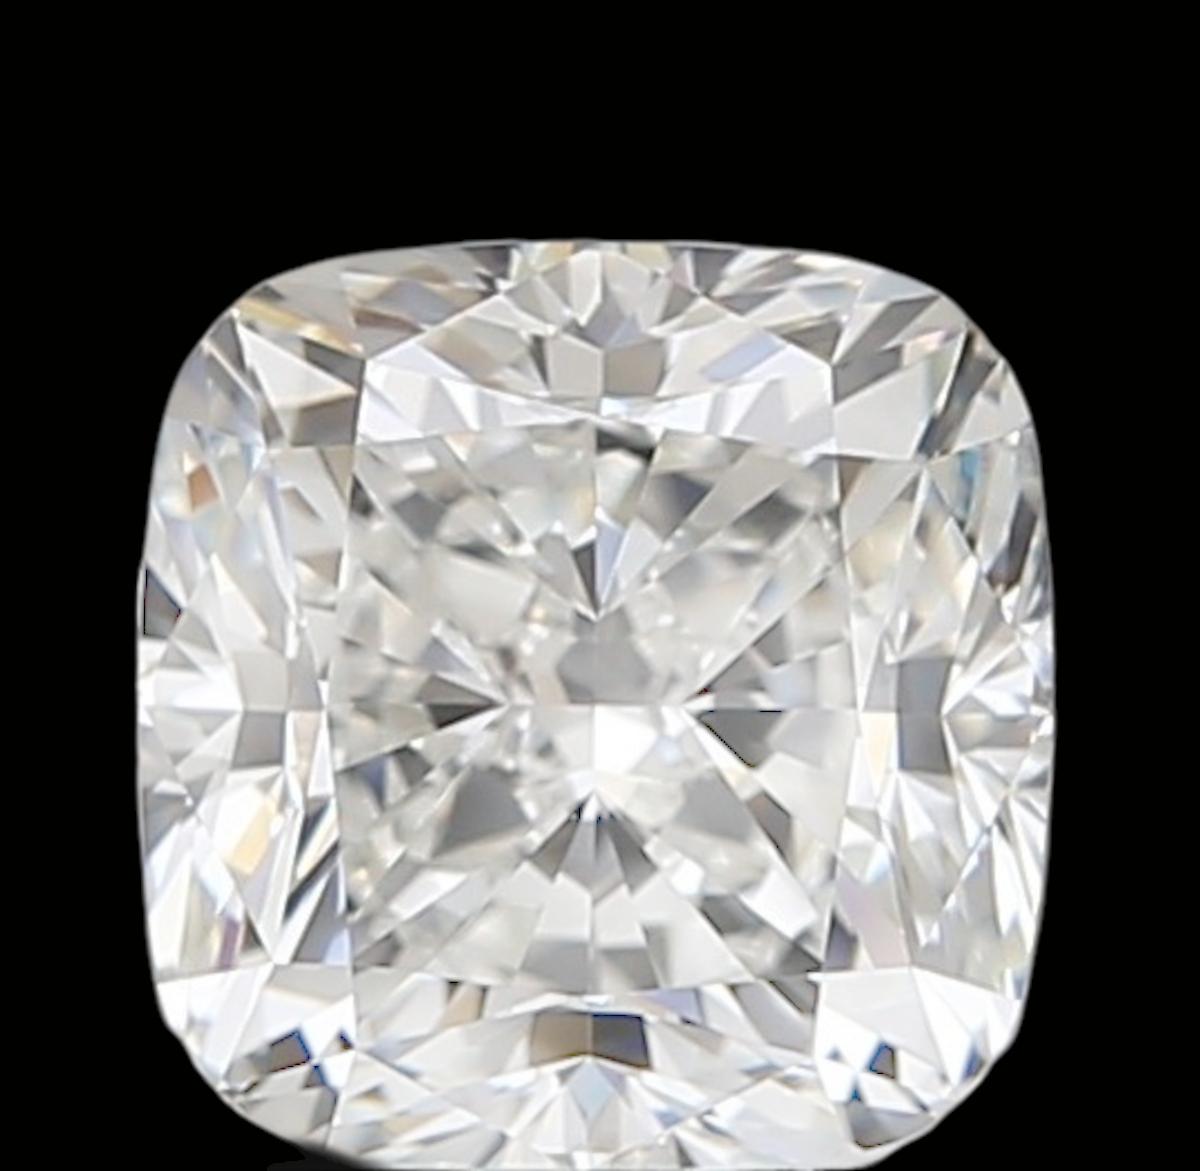 250 carat diamond